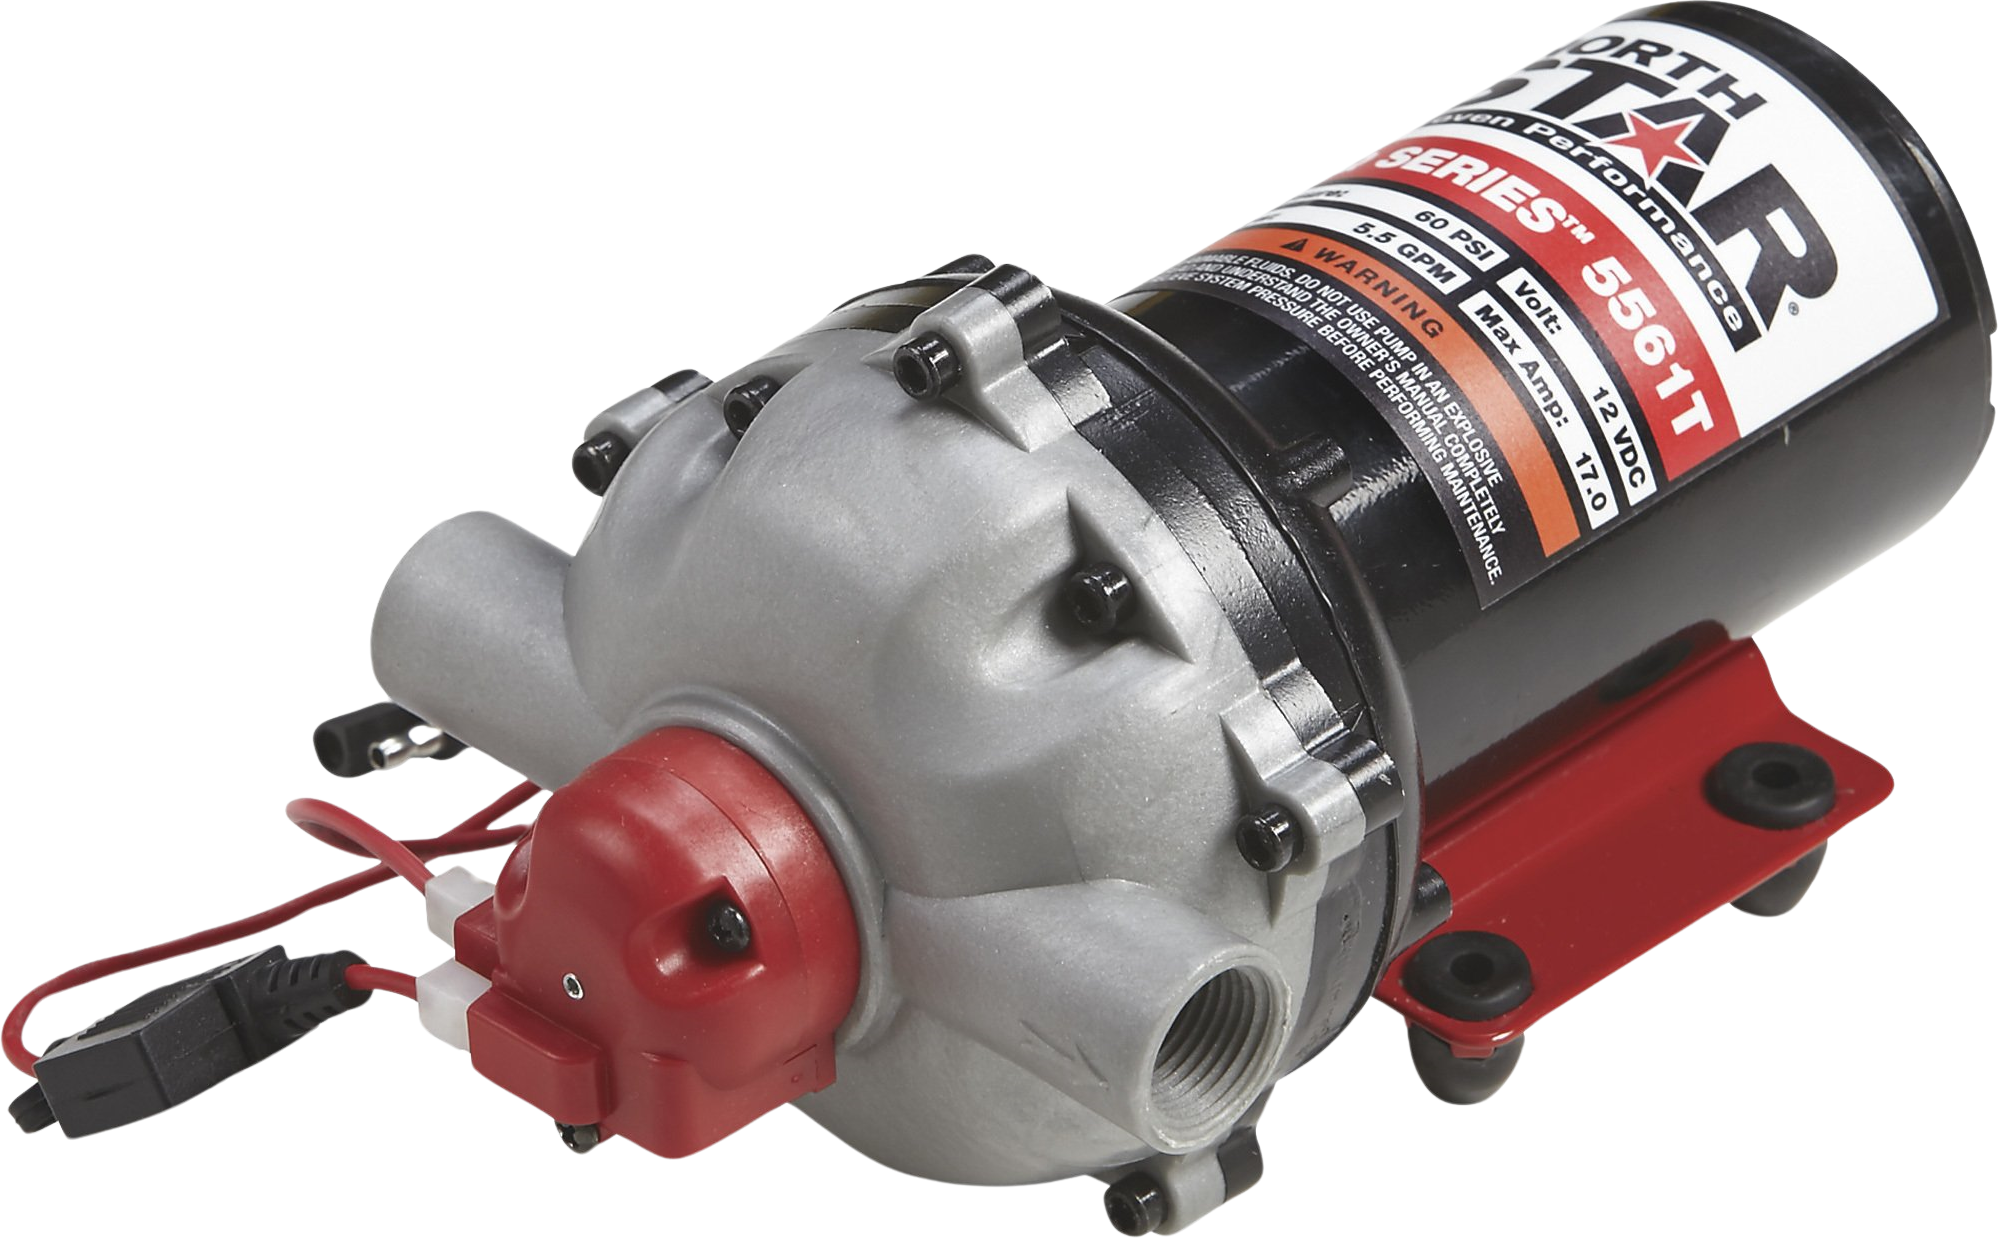 NorthStar, NorthStar NSQ Series Sprayer Diaphragm Pump On Demand 12V 60 PSI 5.5 GPM 2685561 New